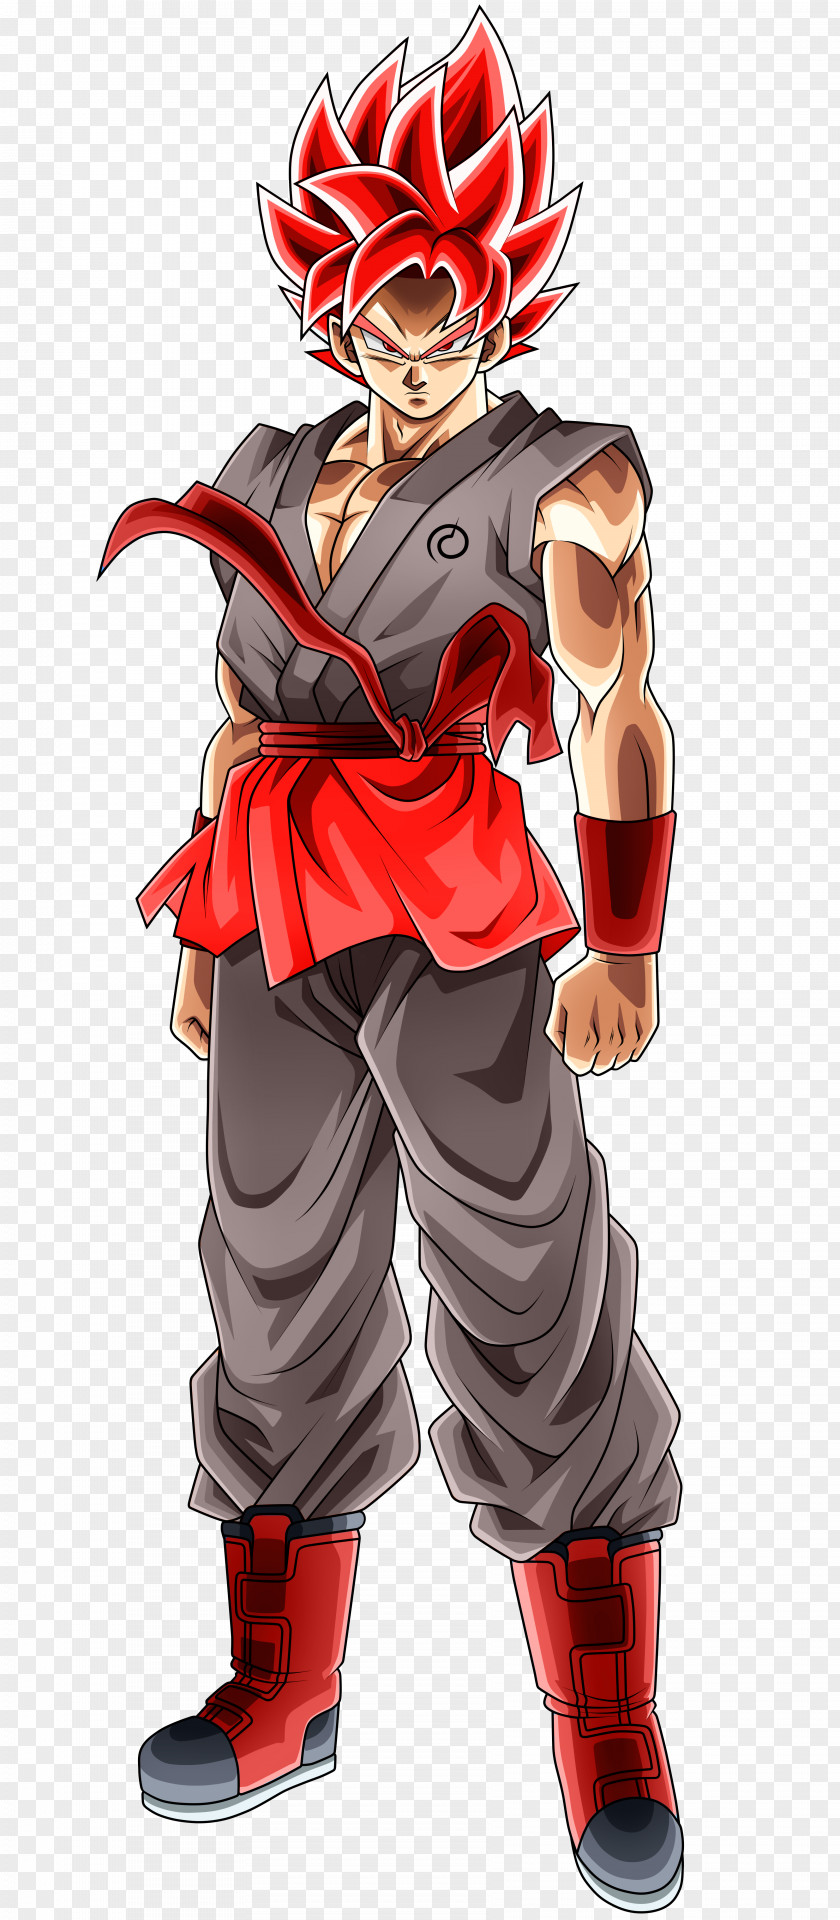 Goku Whis Vegeta Dragon Ball Heroes Beerus PNG